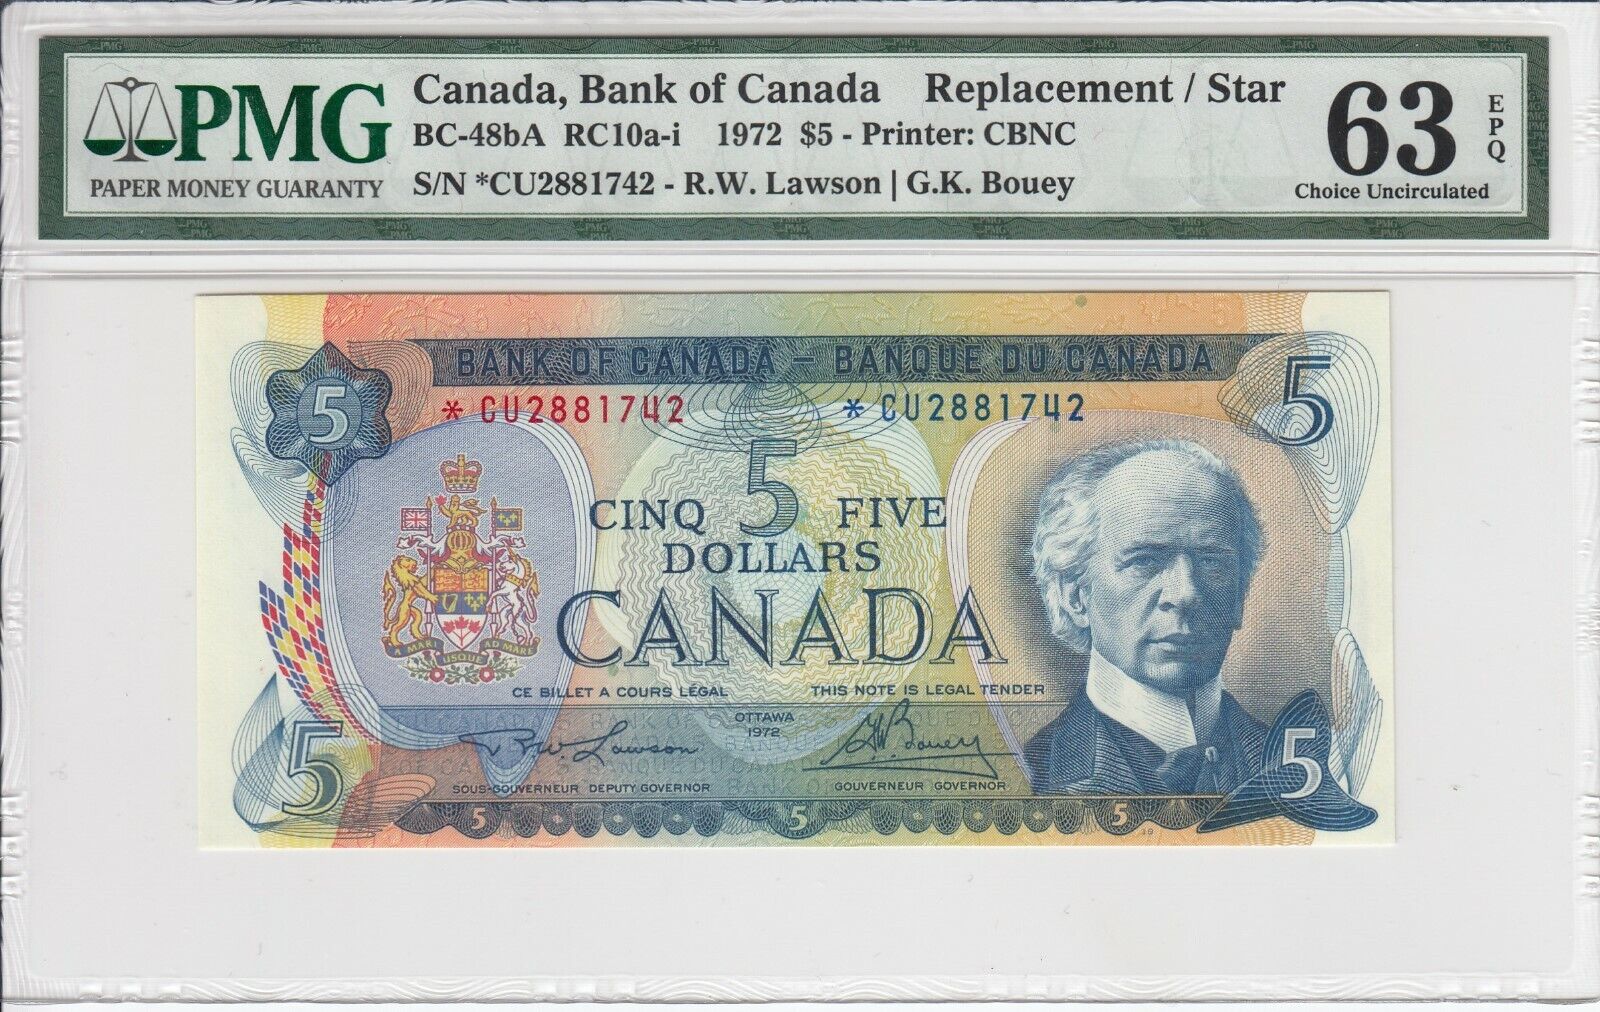 CANADA $5 DOLLARS 1972 BC48bA REPLACEMENT *CU2881742 - PMG 63 CHOICE UNC EPQ